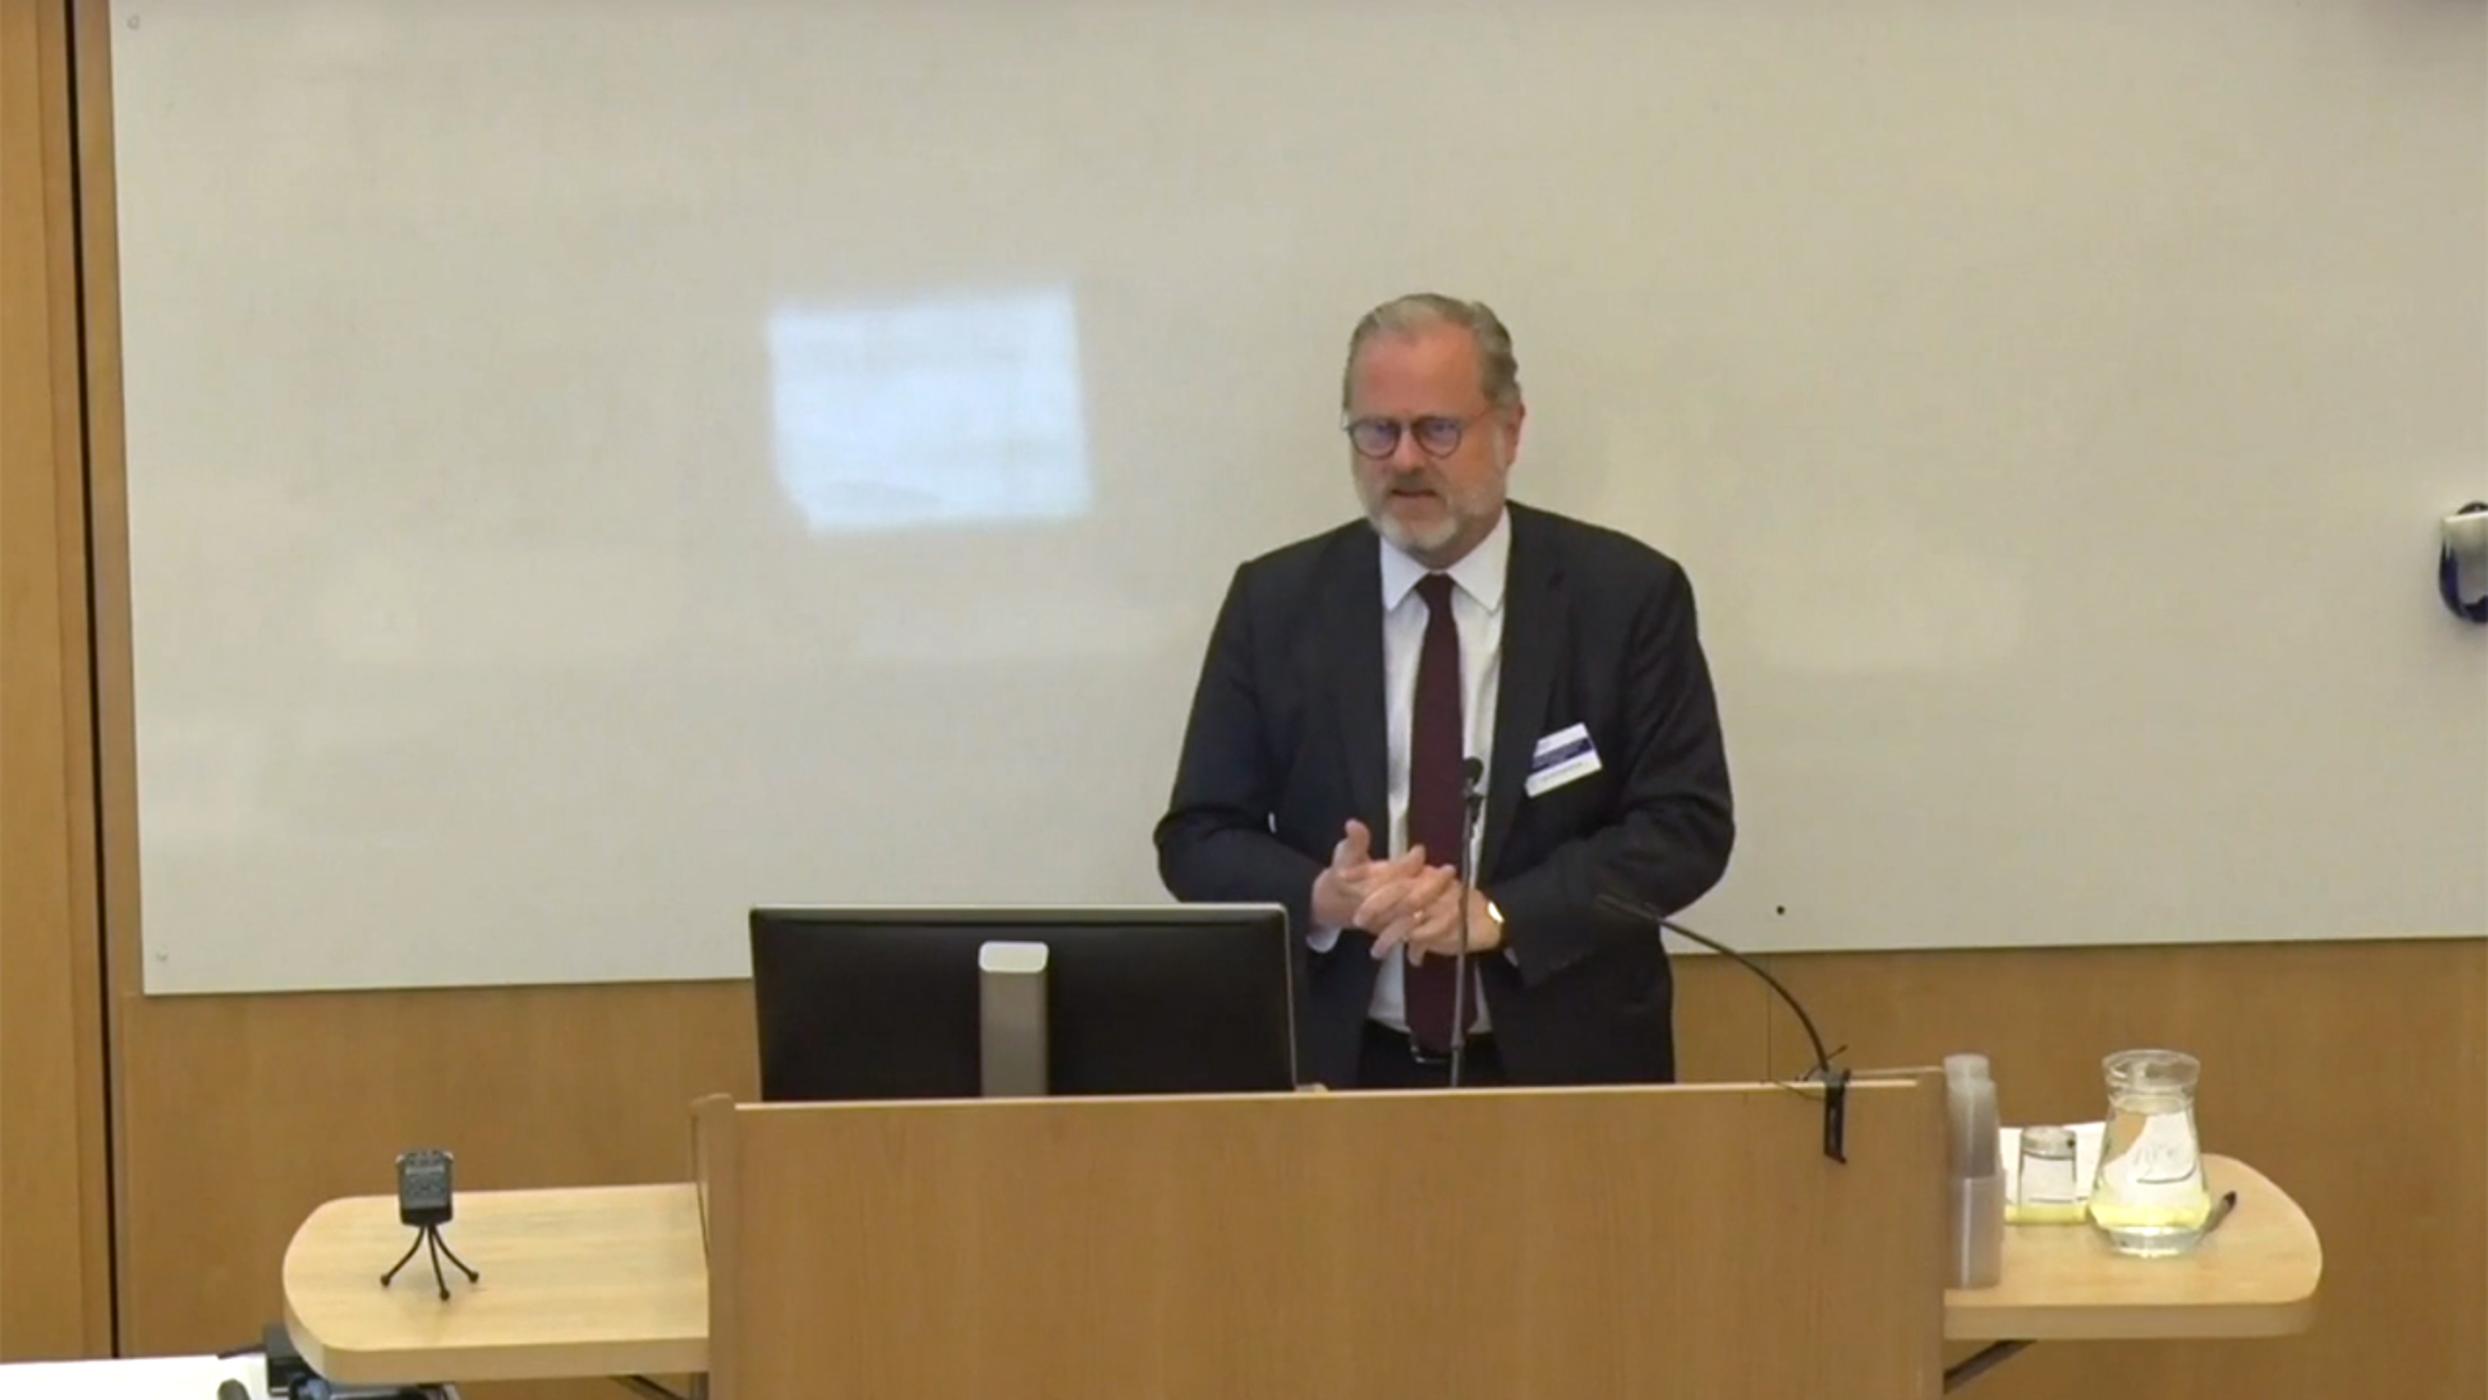 'Progress on EBP Capability in Sweden': Erik Wennerstrom